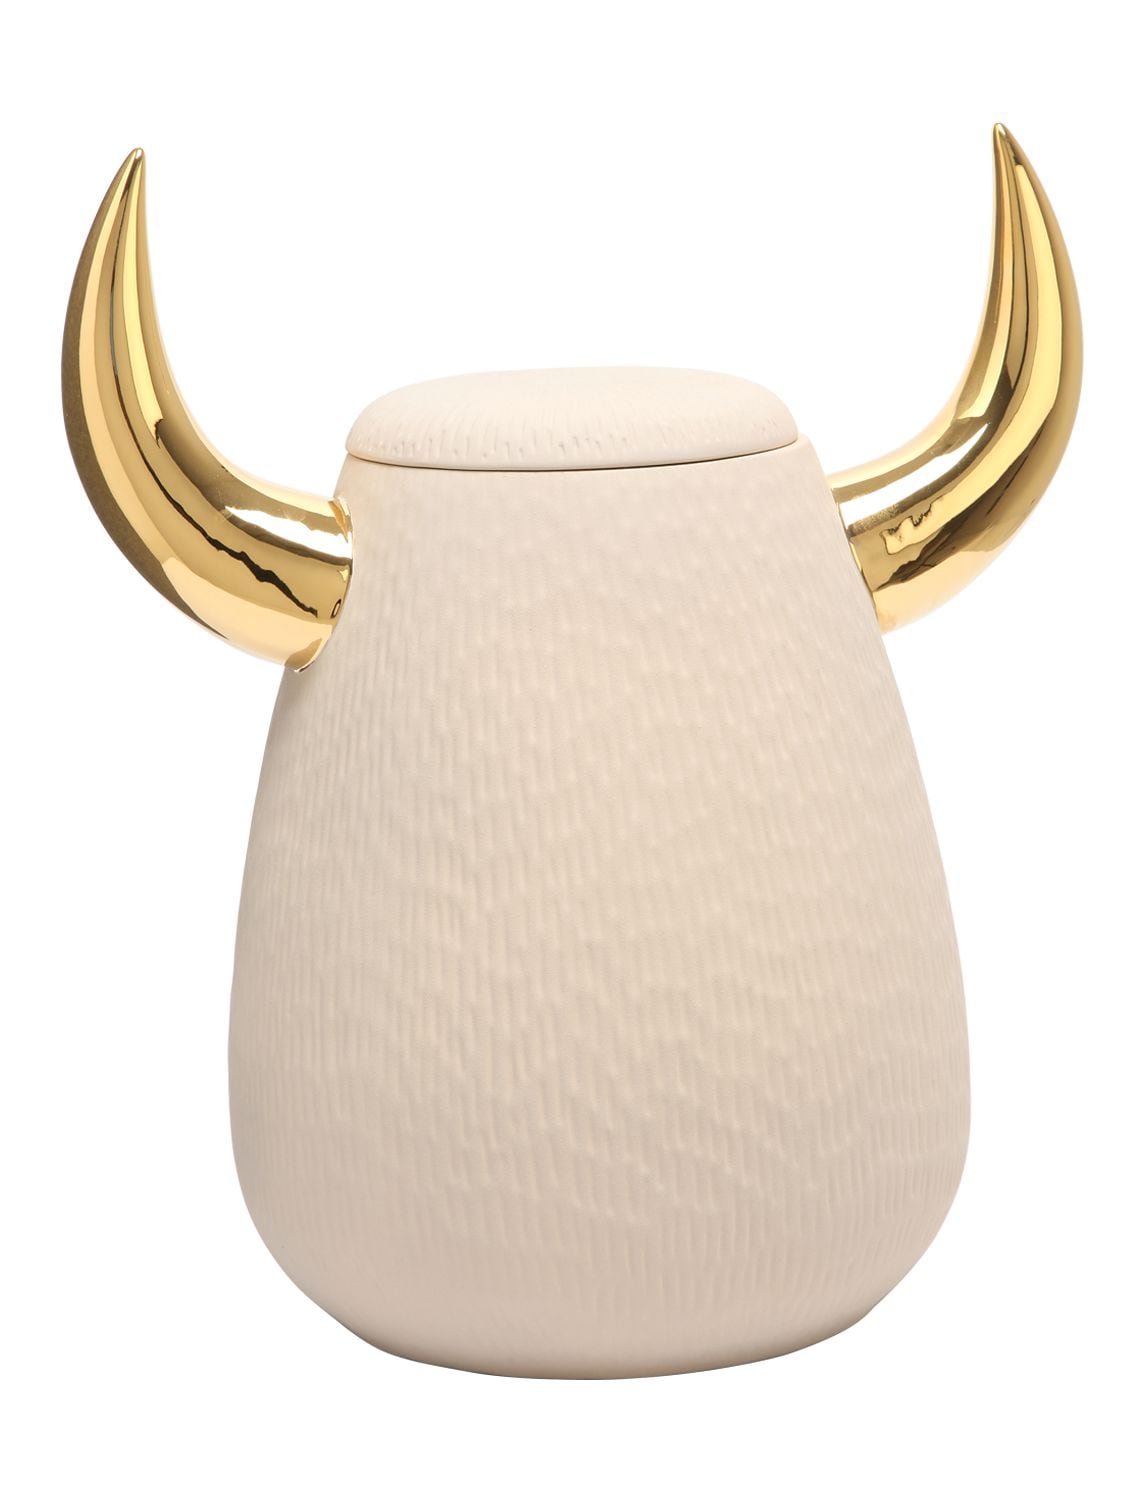 Bosa Bull Ceramic Container In Beige,gold